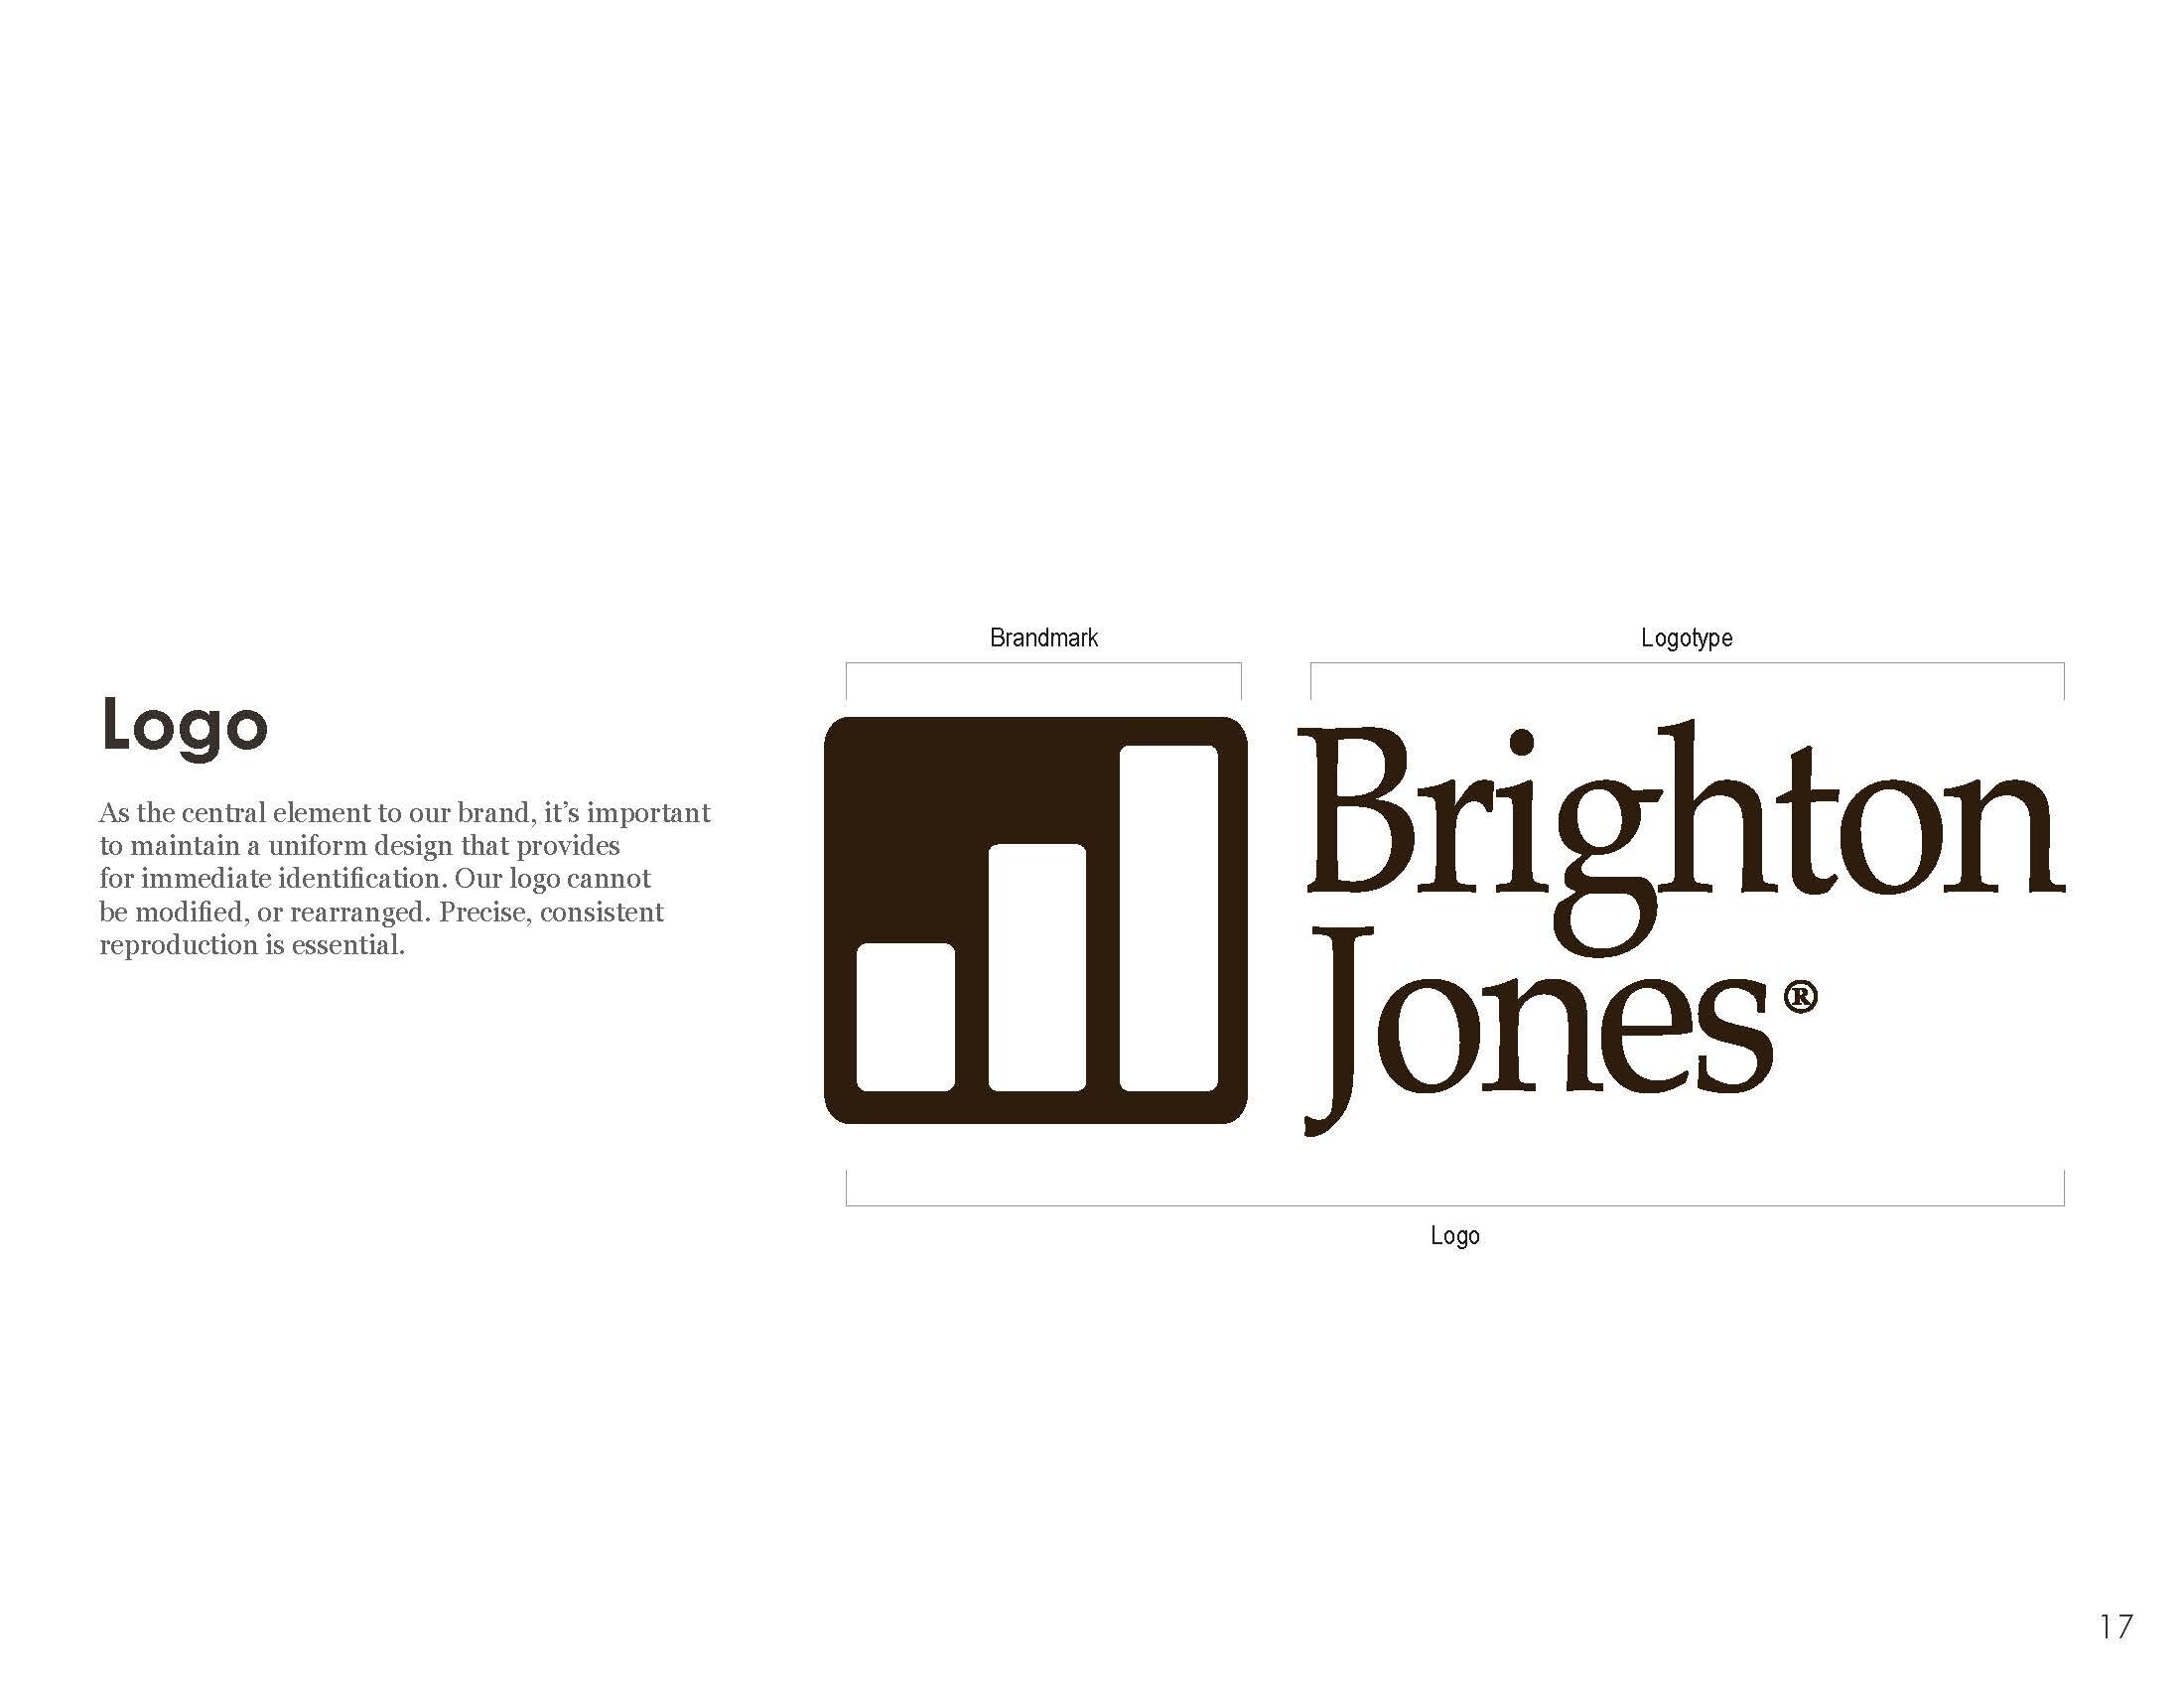 Brighton Jones Brand Guide _Page_08.jpg